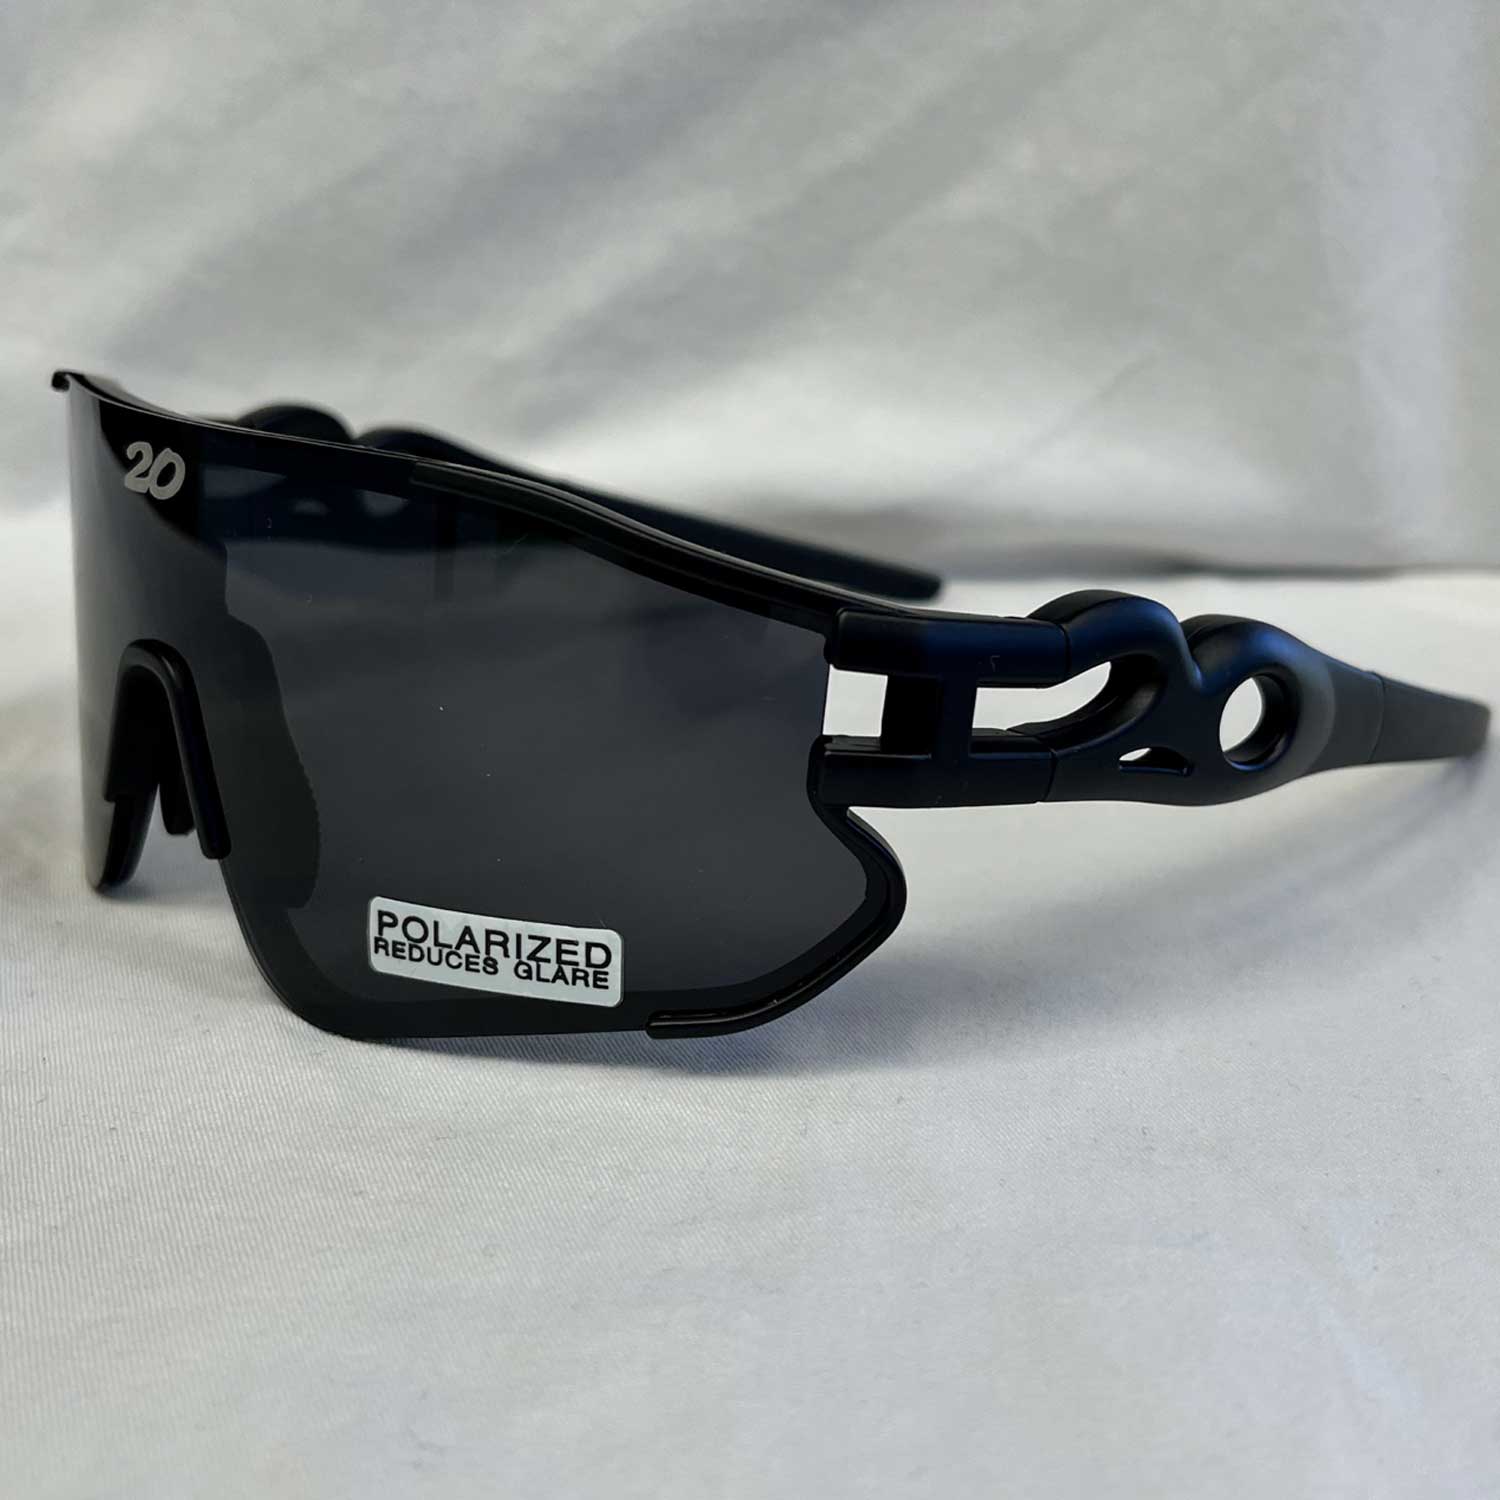 Twenty20 All Rounder - Blade style sunglasses